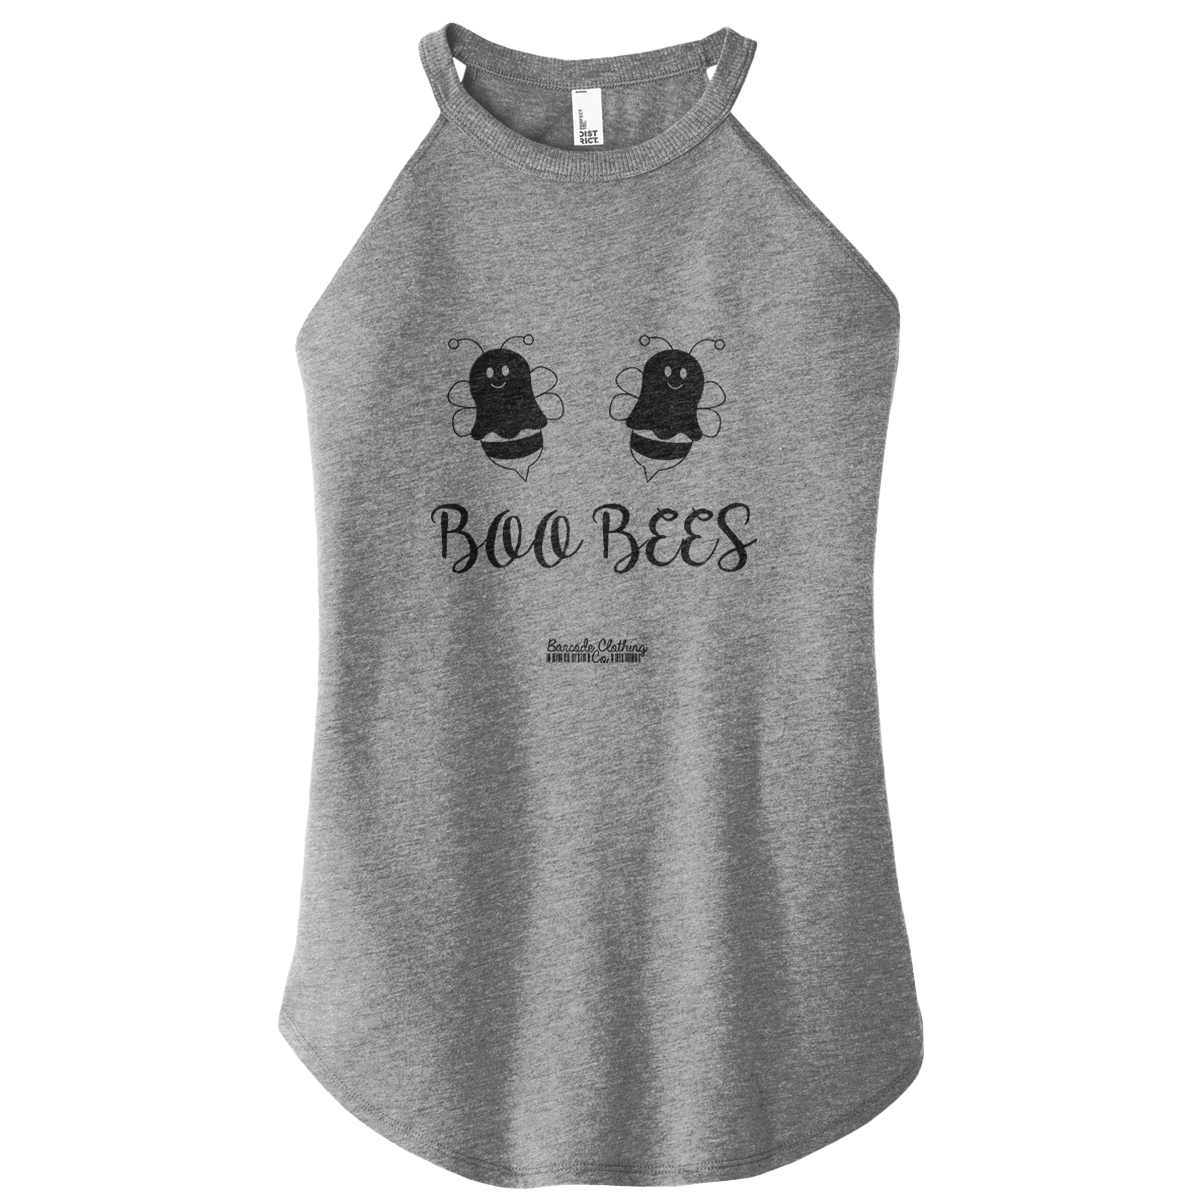 Boo Bees Rocker Tank